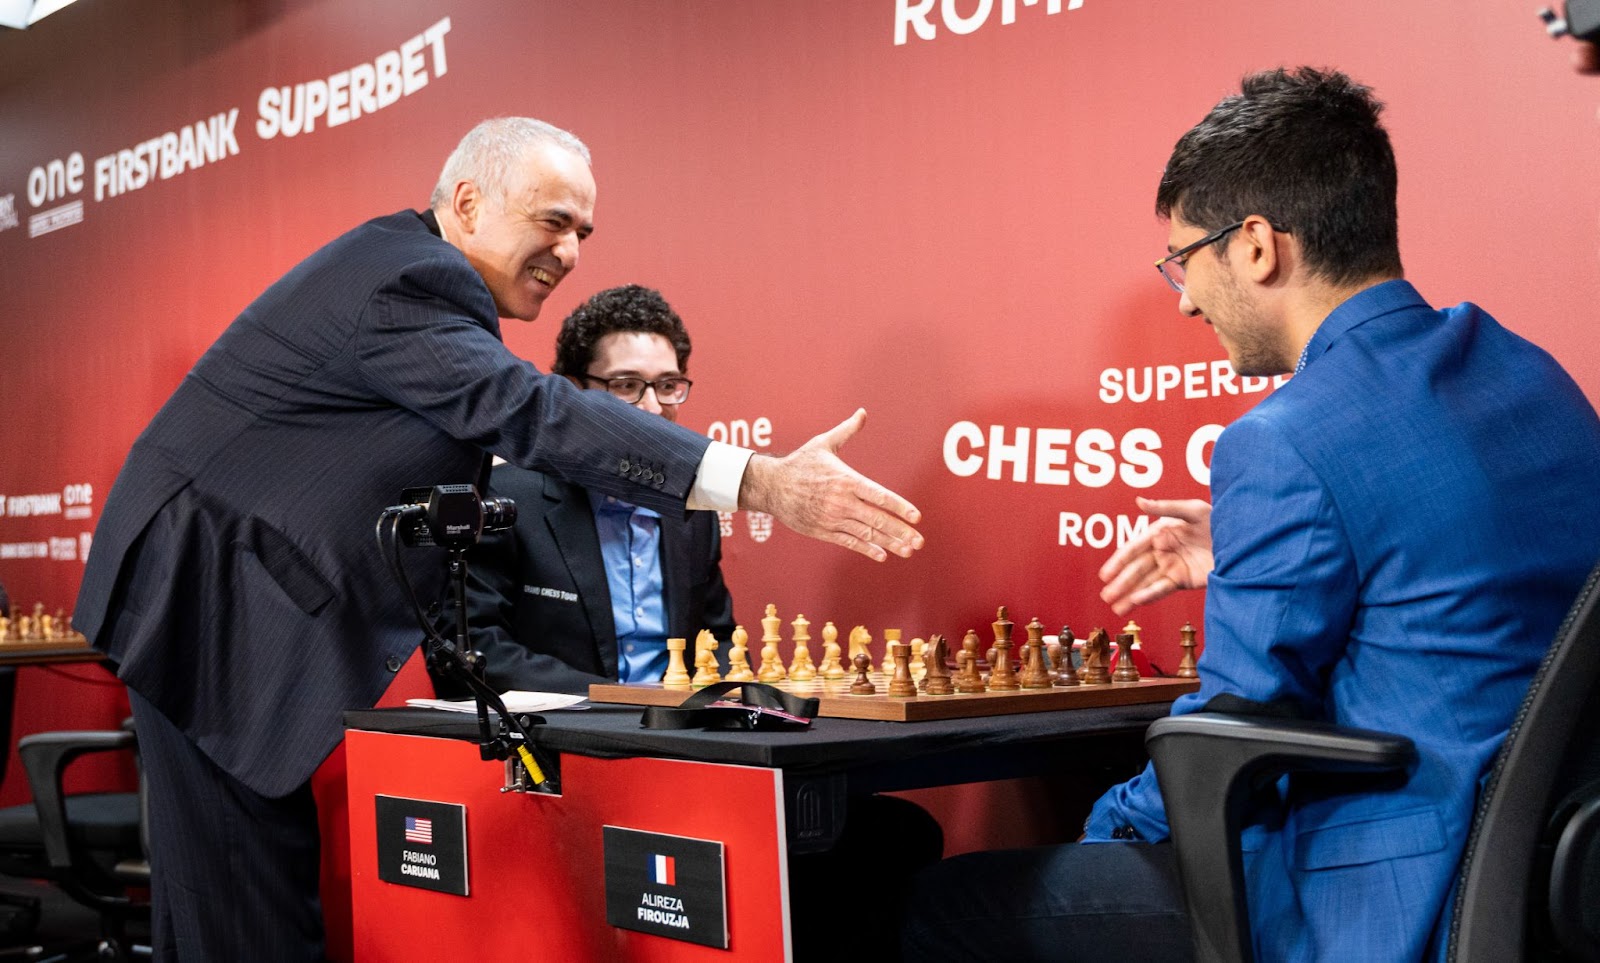 Nepo defeats Firouzja, Grand Chess Tour Romania 2022 – R2 recap – Chessdom